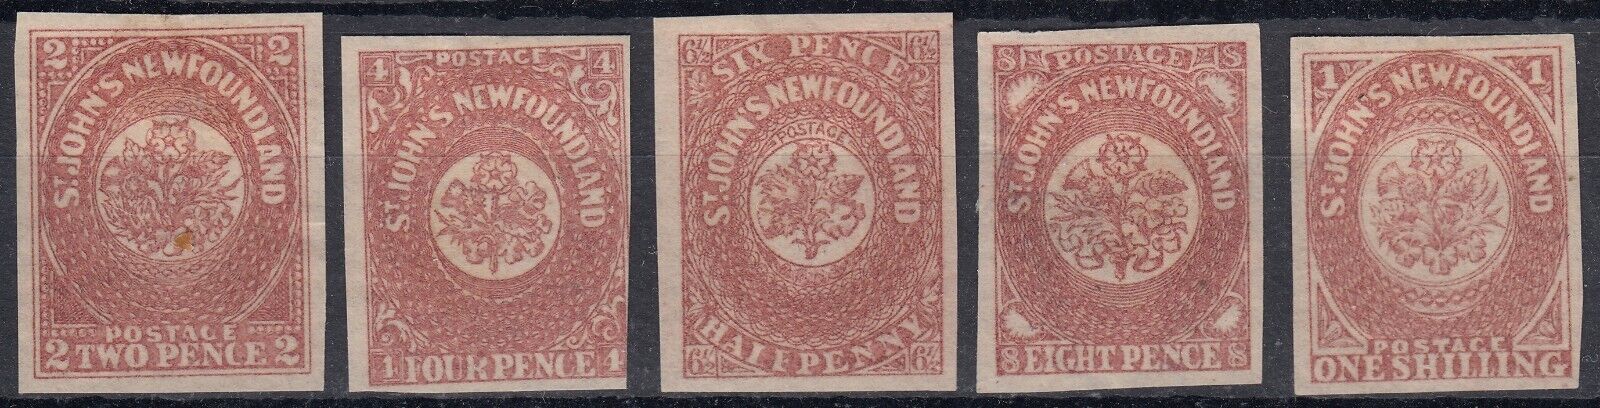 Newfoundland 1857 5 Different Oneglia Panelli Engraved Forgery, Facsimile, Fake.